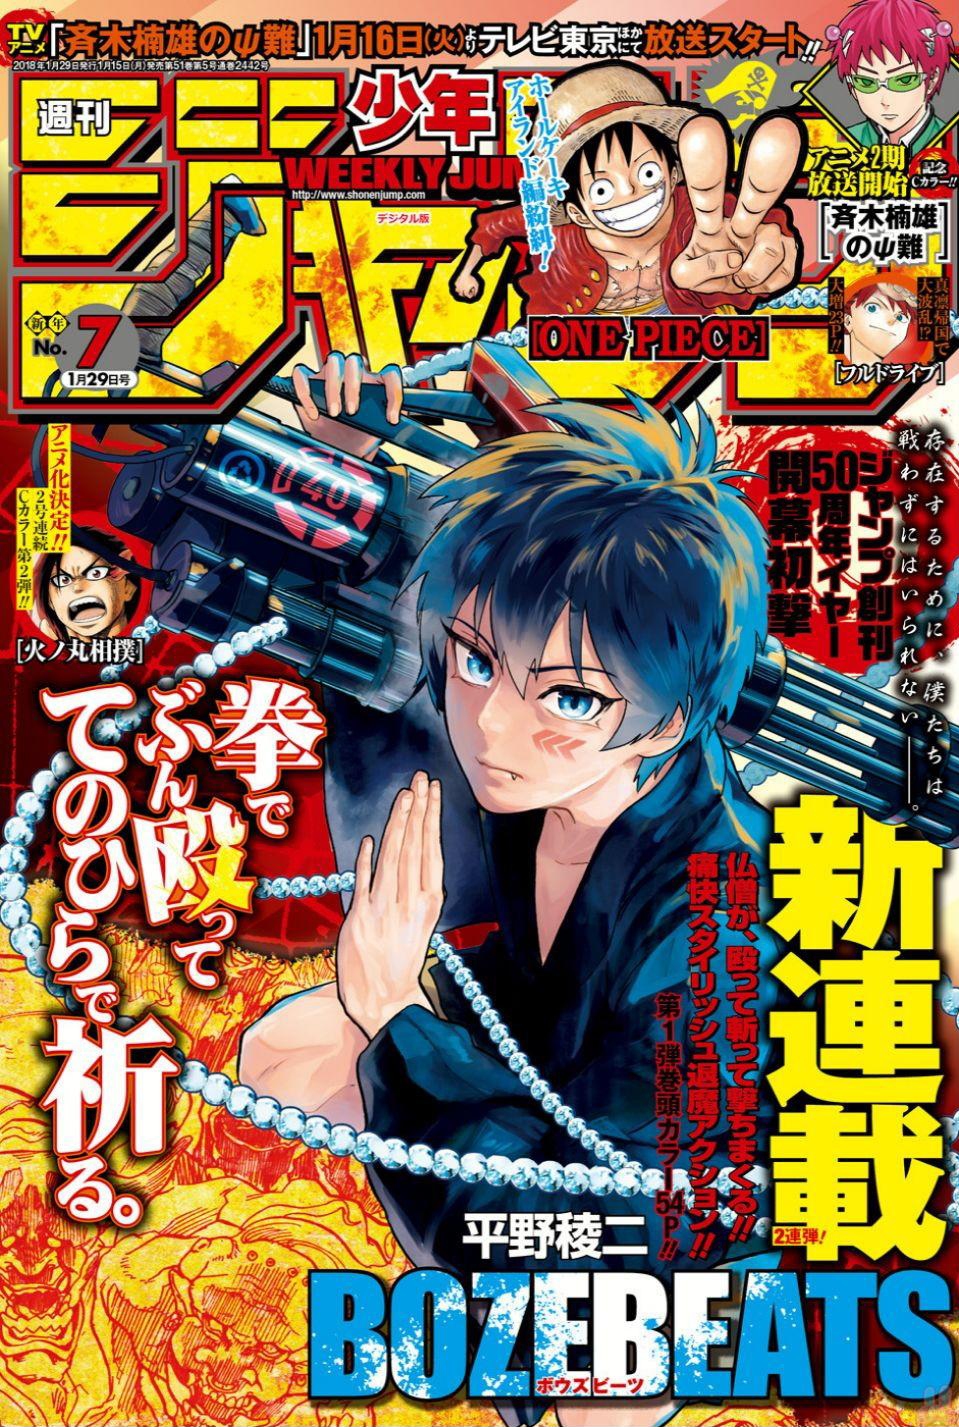 Weekly Shonen Jump Issue 7 18 Jump Database Fandom